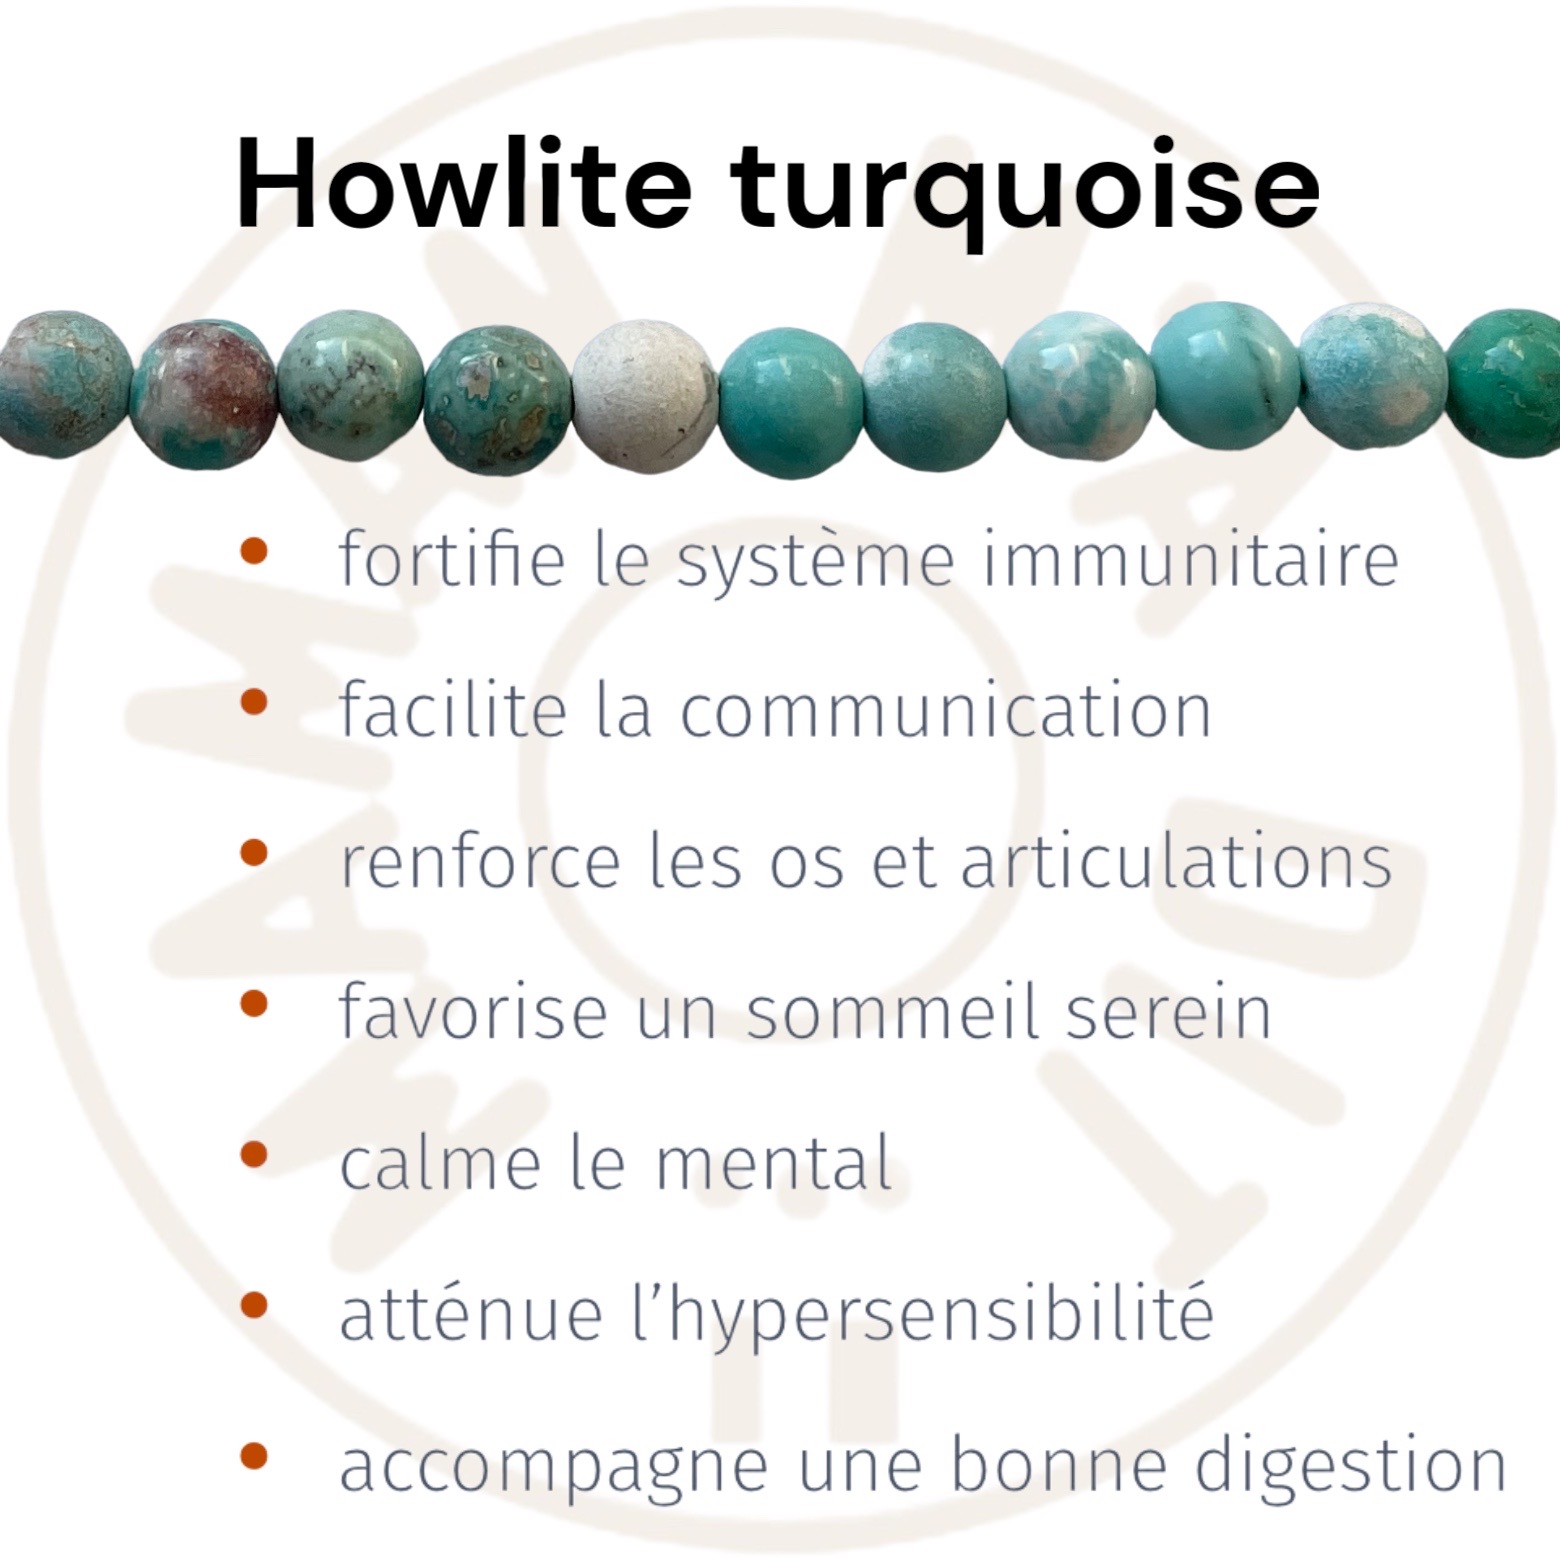 howlite-turquoise-vertus.jpg